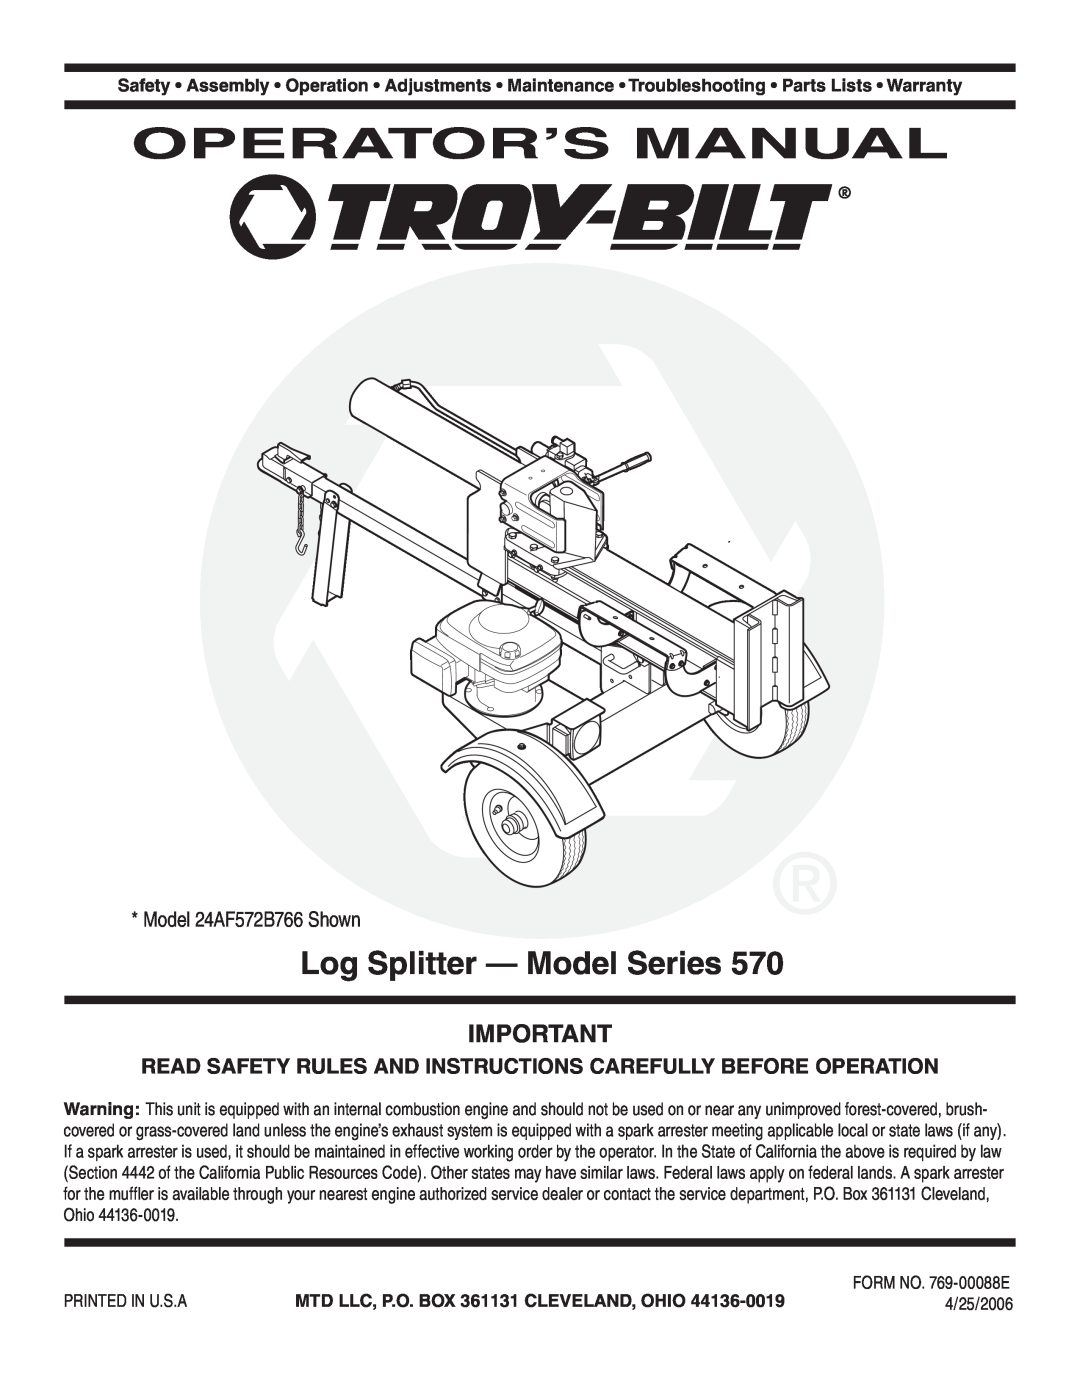 Troy-Bilt 570 manual Operator’S Manual, Log Splitter - Model Series, Model 24AF572B766 Shown 